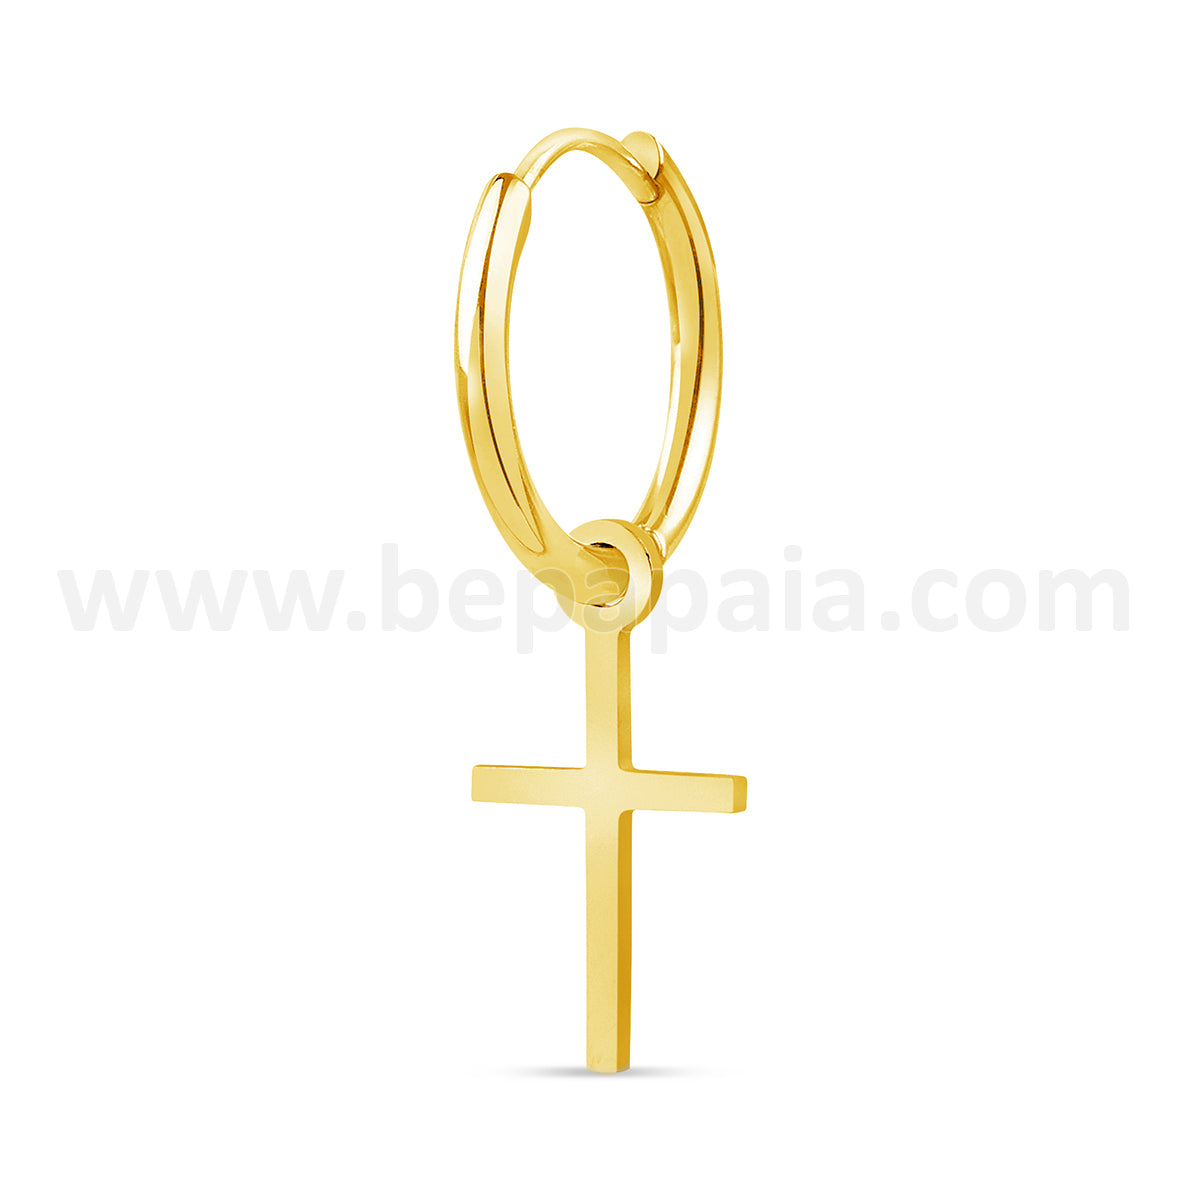 Gold steel hoop earring with small cross